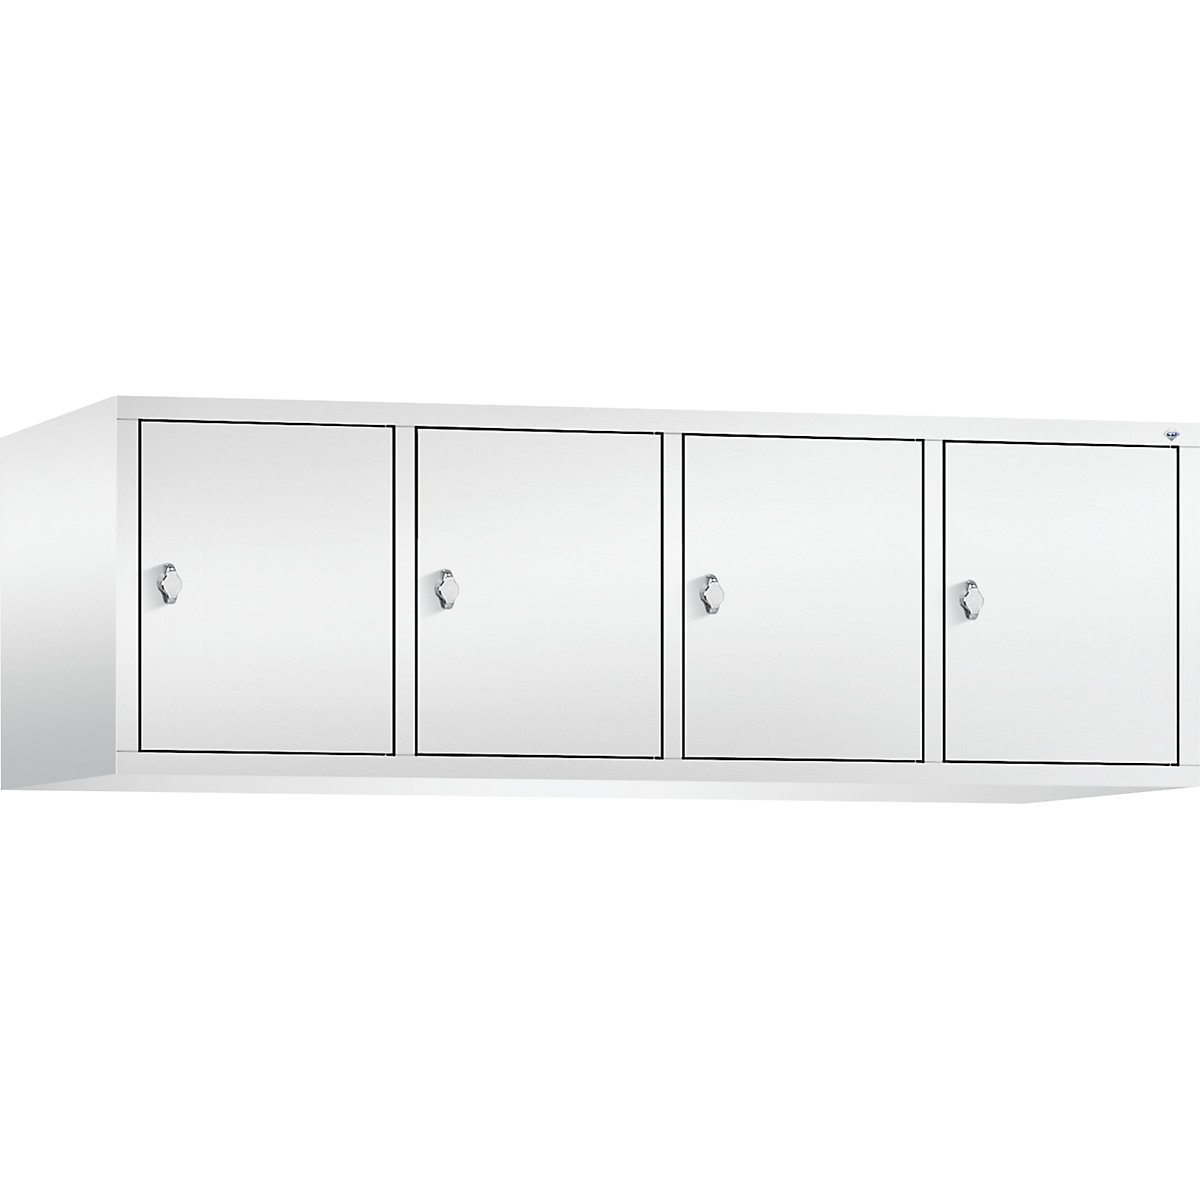 C+P – Altillo CLASSIC, 4 compartimentos, anchura de compartimento 400 mm, blanco tráfico